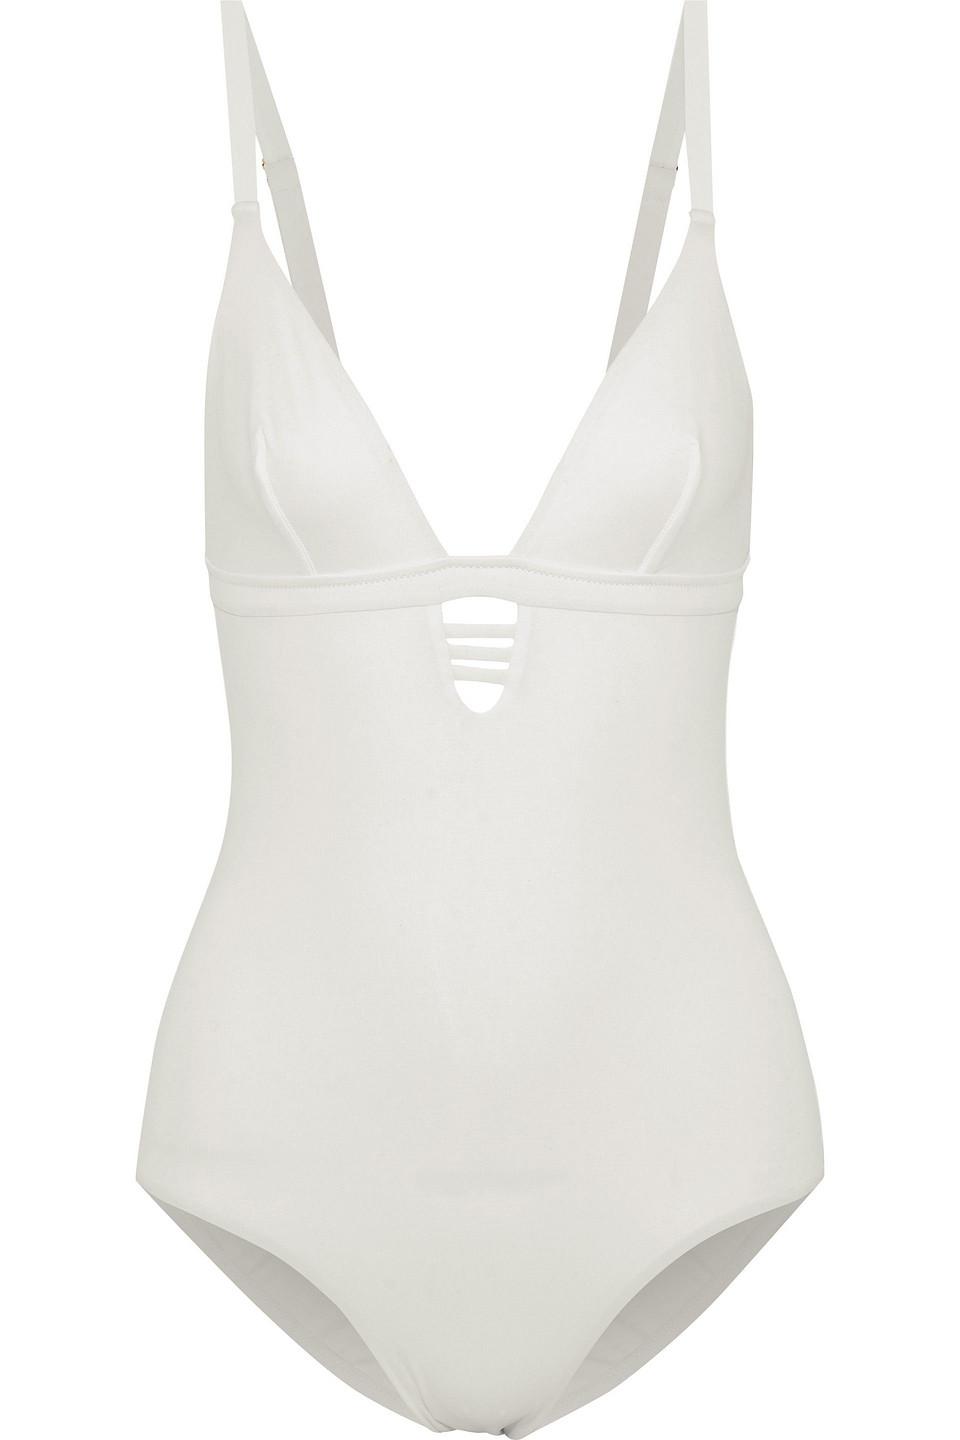 Melissa Odabash Synthetic Amazon Cutout Swimsuit in White - Lyst